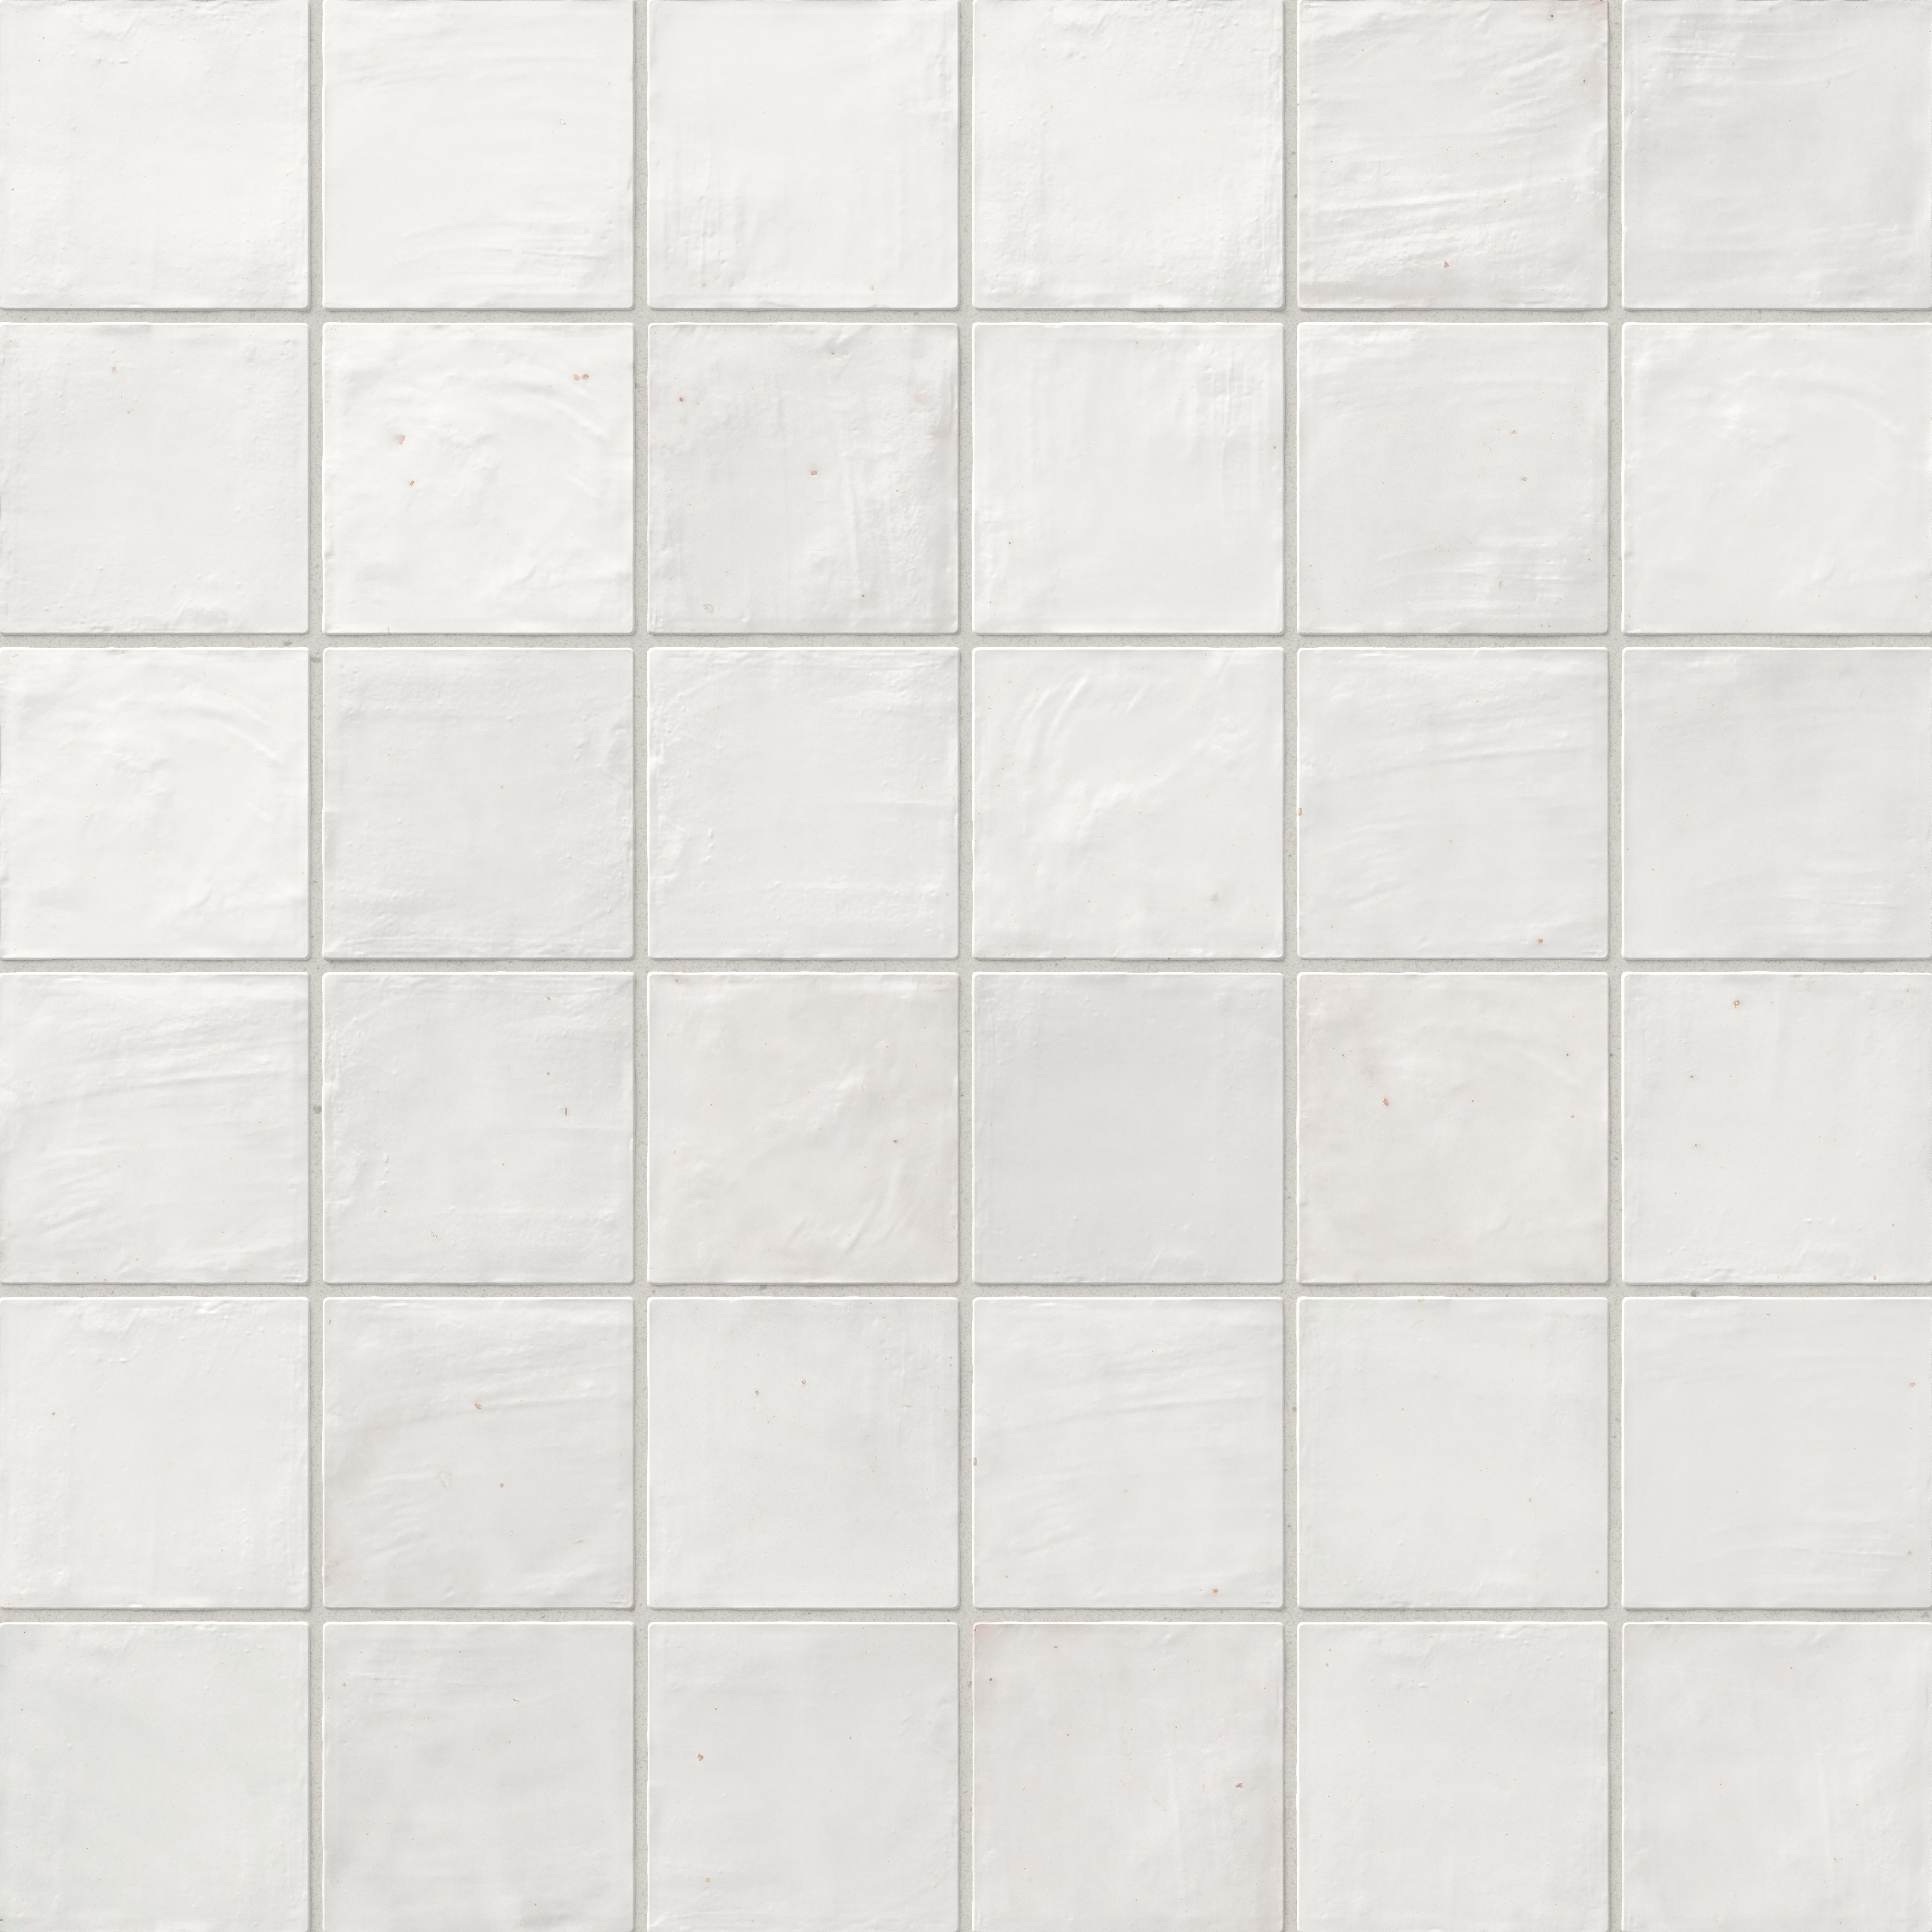 Everly 4x4 Matte Ceramic Tile in Cloud